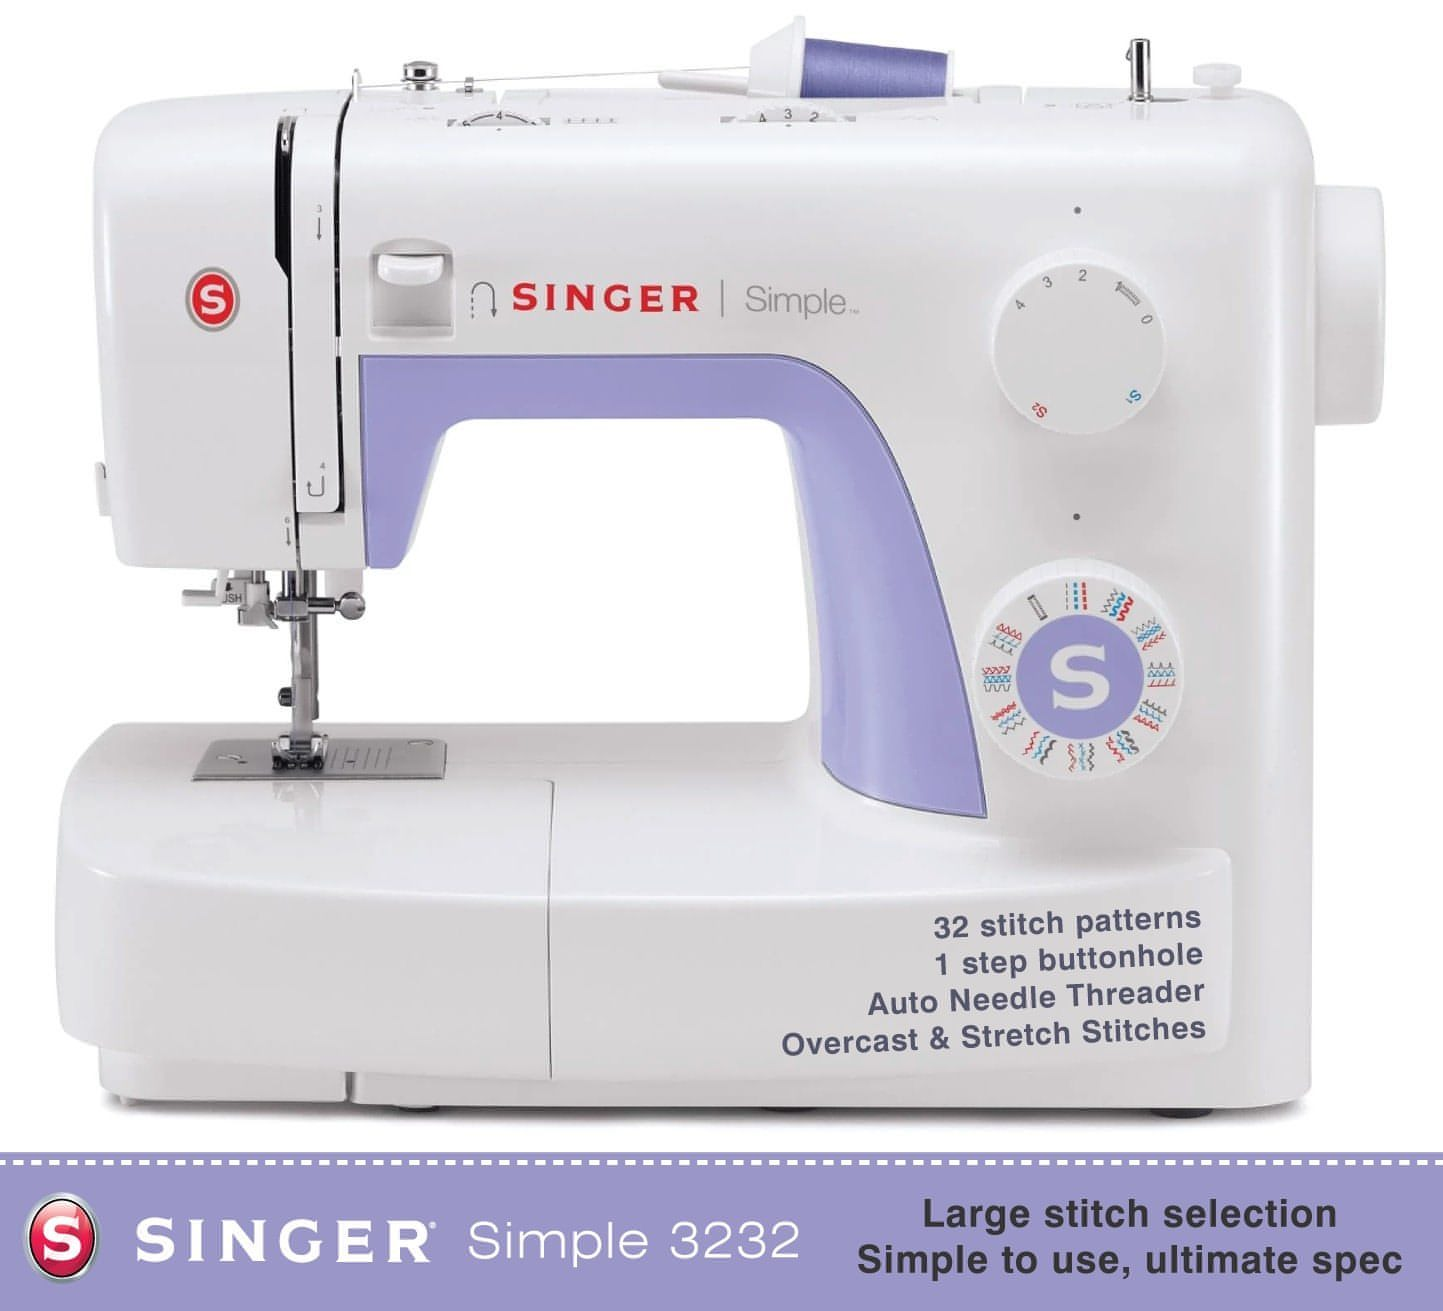 Singer Simple 3232 Sewing Machine - High spec 32 stitch patterns